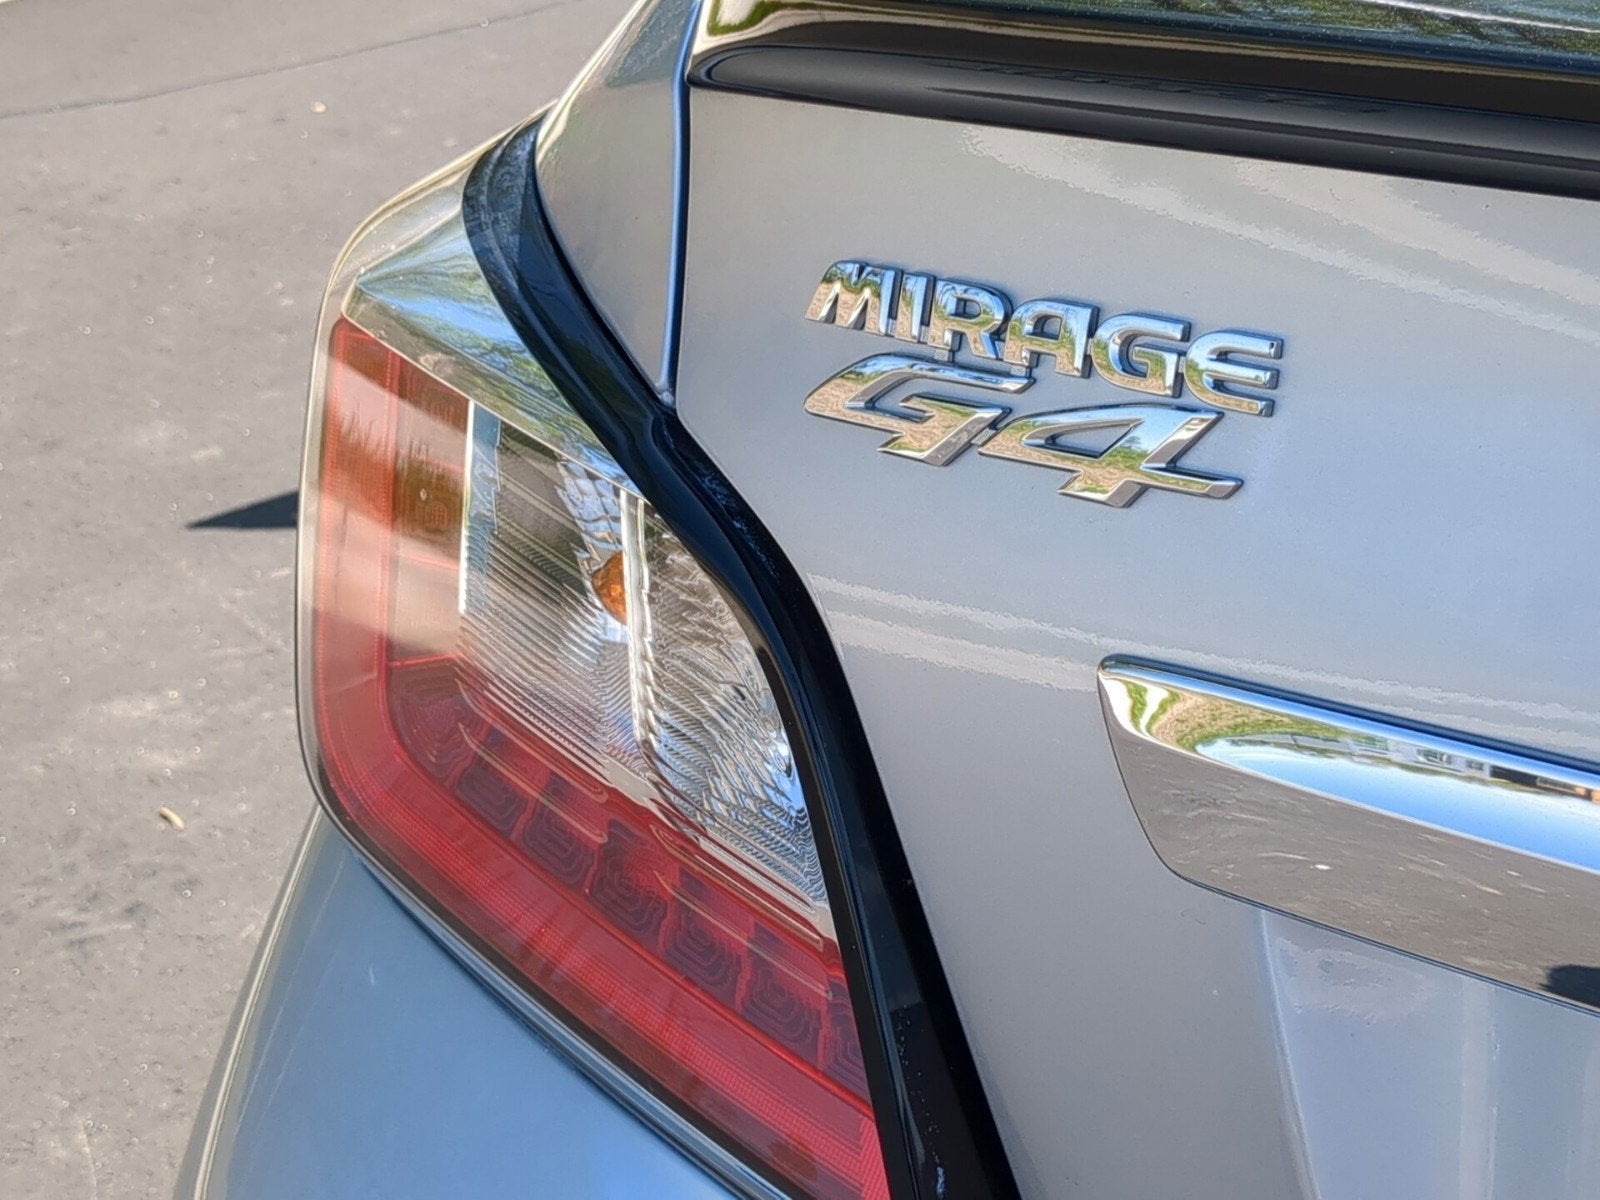 2023 Mitsubishi Mirage G4 Black Edition